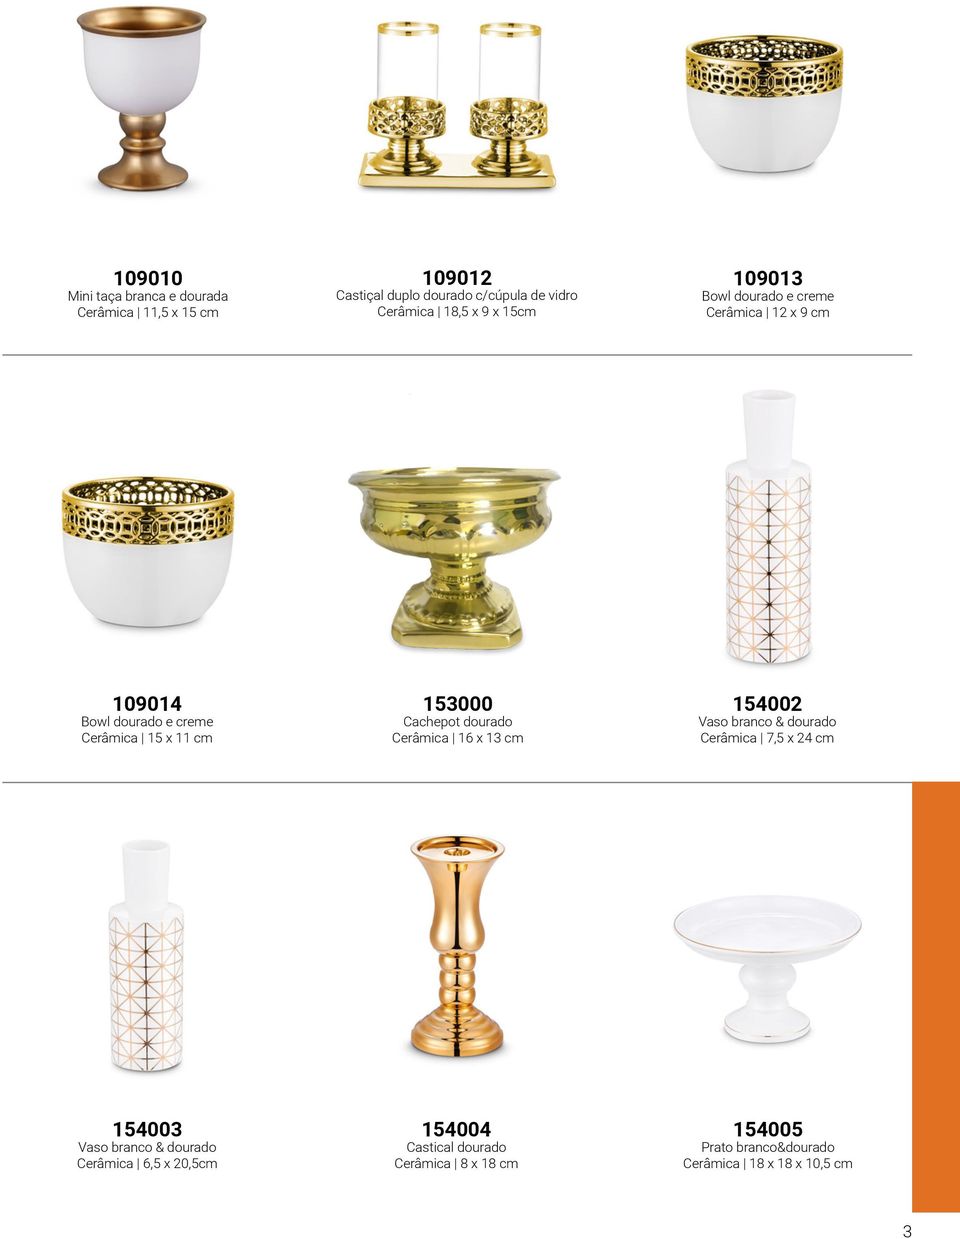 153000 Cachepot dourado Cerâmica 16 x 13 cm 154002 Vaso branco & dourado Cerâmica 7,5 x 24 cm 154003 Vaso branco &